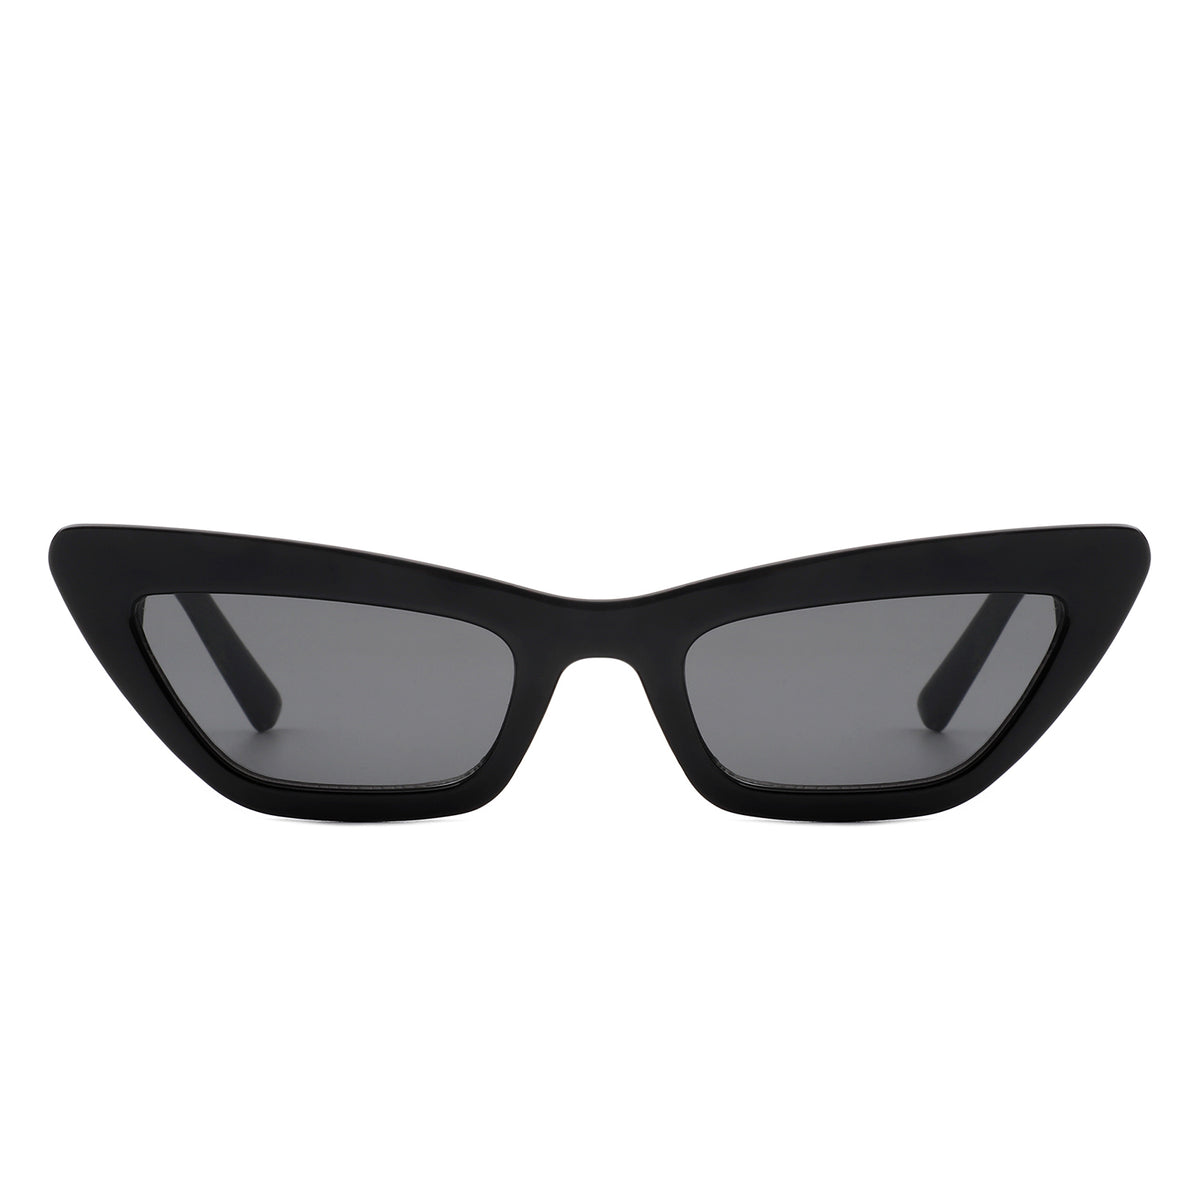 HS2098 - Women Slim Retro Narrow Cat Eye Fashion Sunglasses